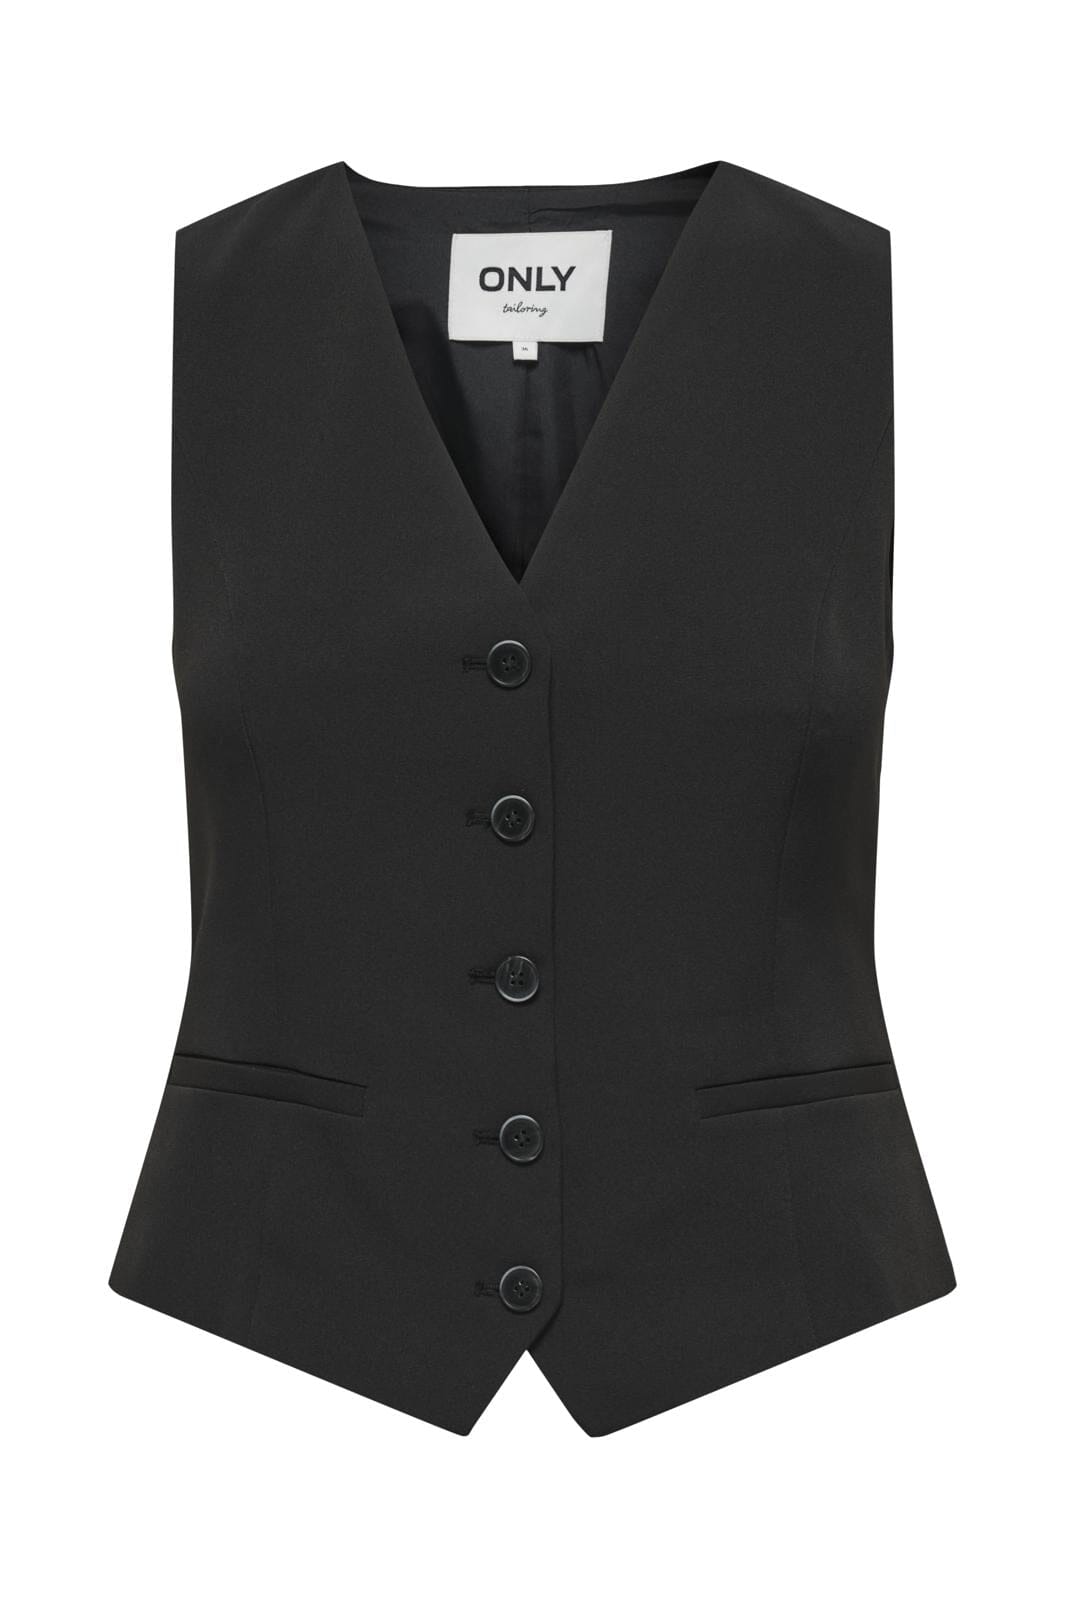 Only - Onliris Waistcoat Tlr - 4553283 Black